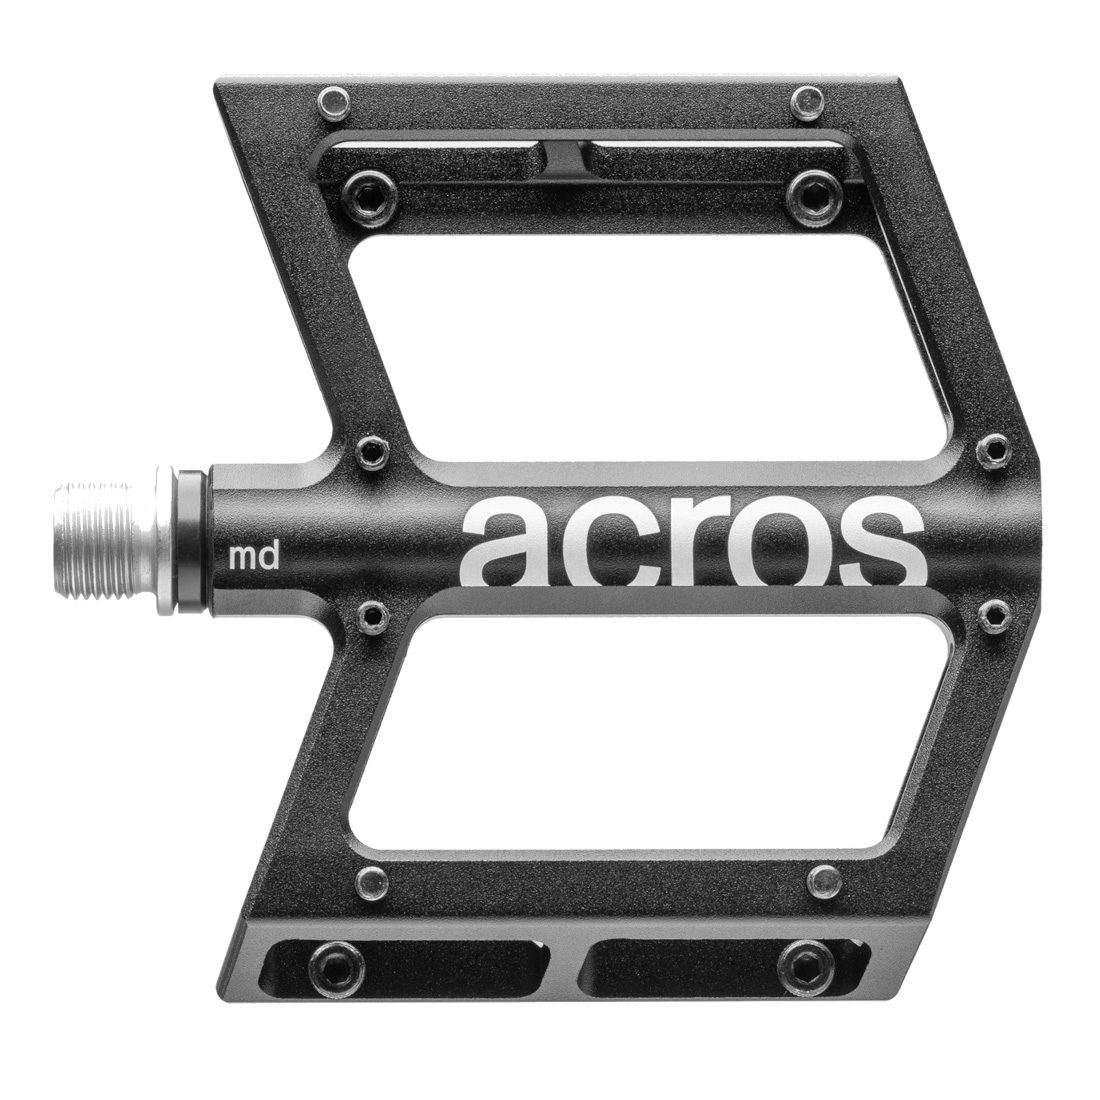 Productfoto van ACROS MD-Pedal - black